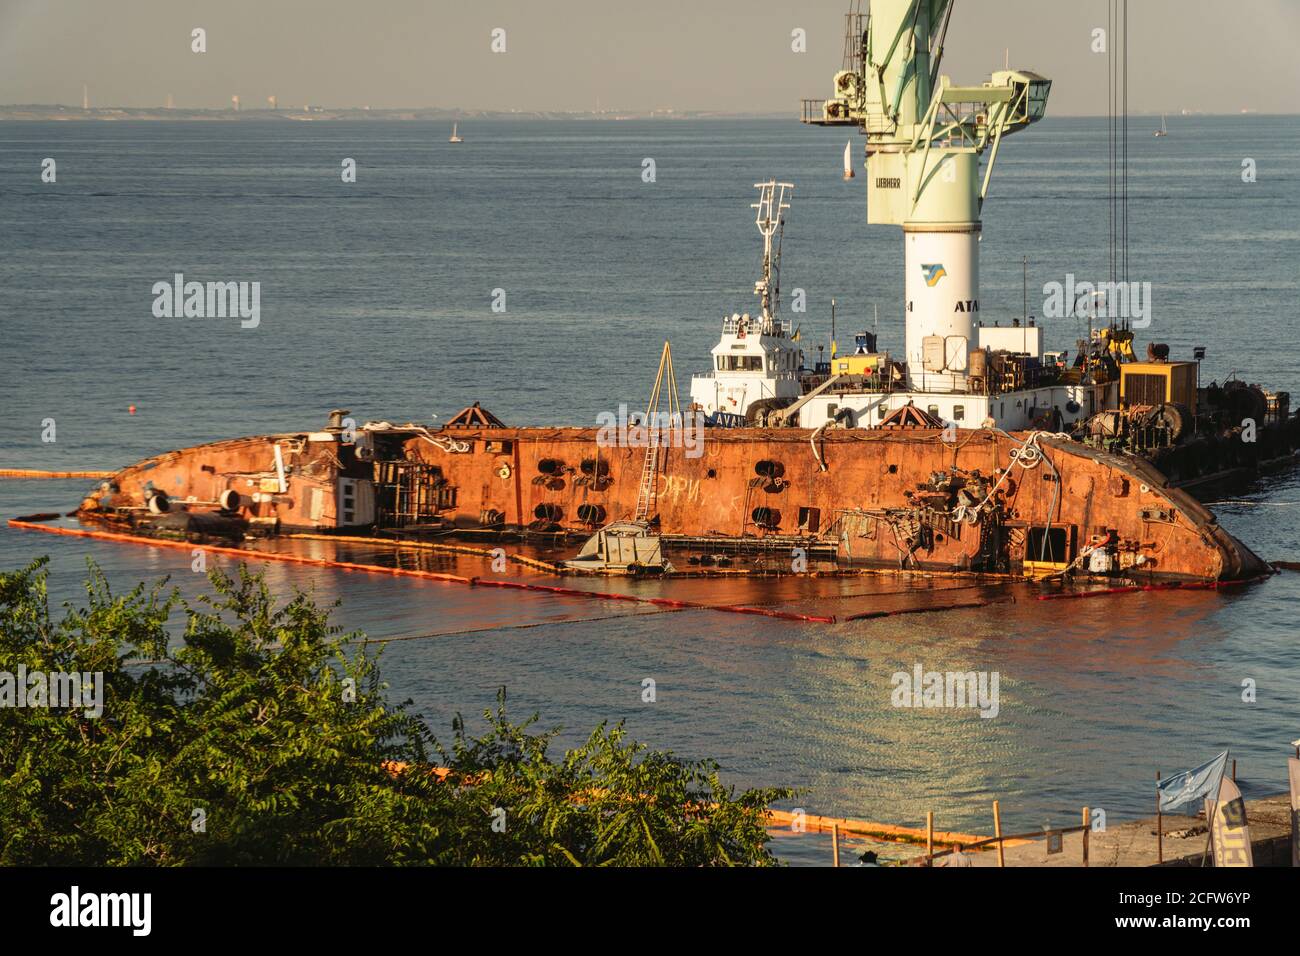 Oil tanker Delphi crashed near Black Sea coast in Ukraine, Odessa 26 August 2020. Small tanker, rusty old, lies on its side in sea. Lifting sunken Stock Photo